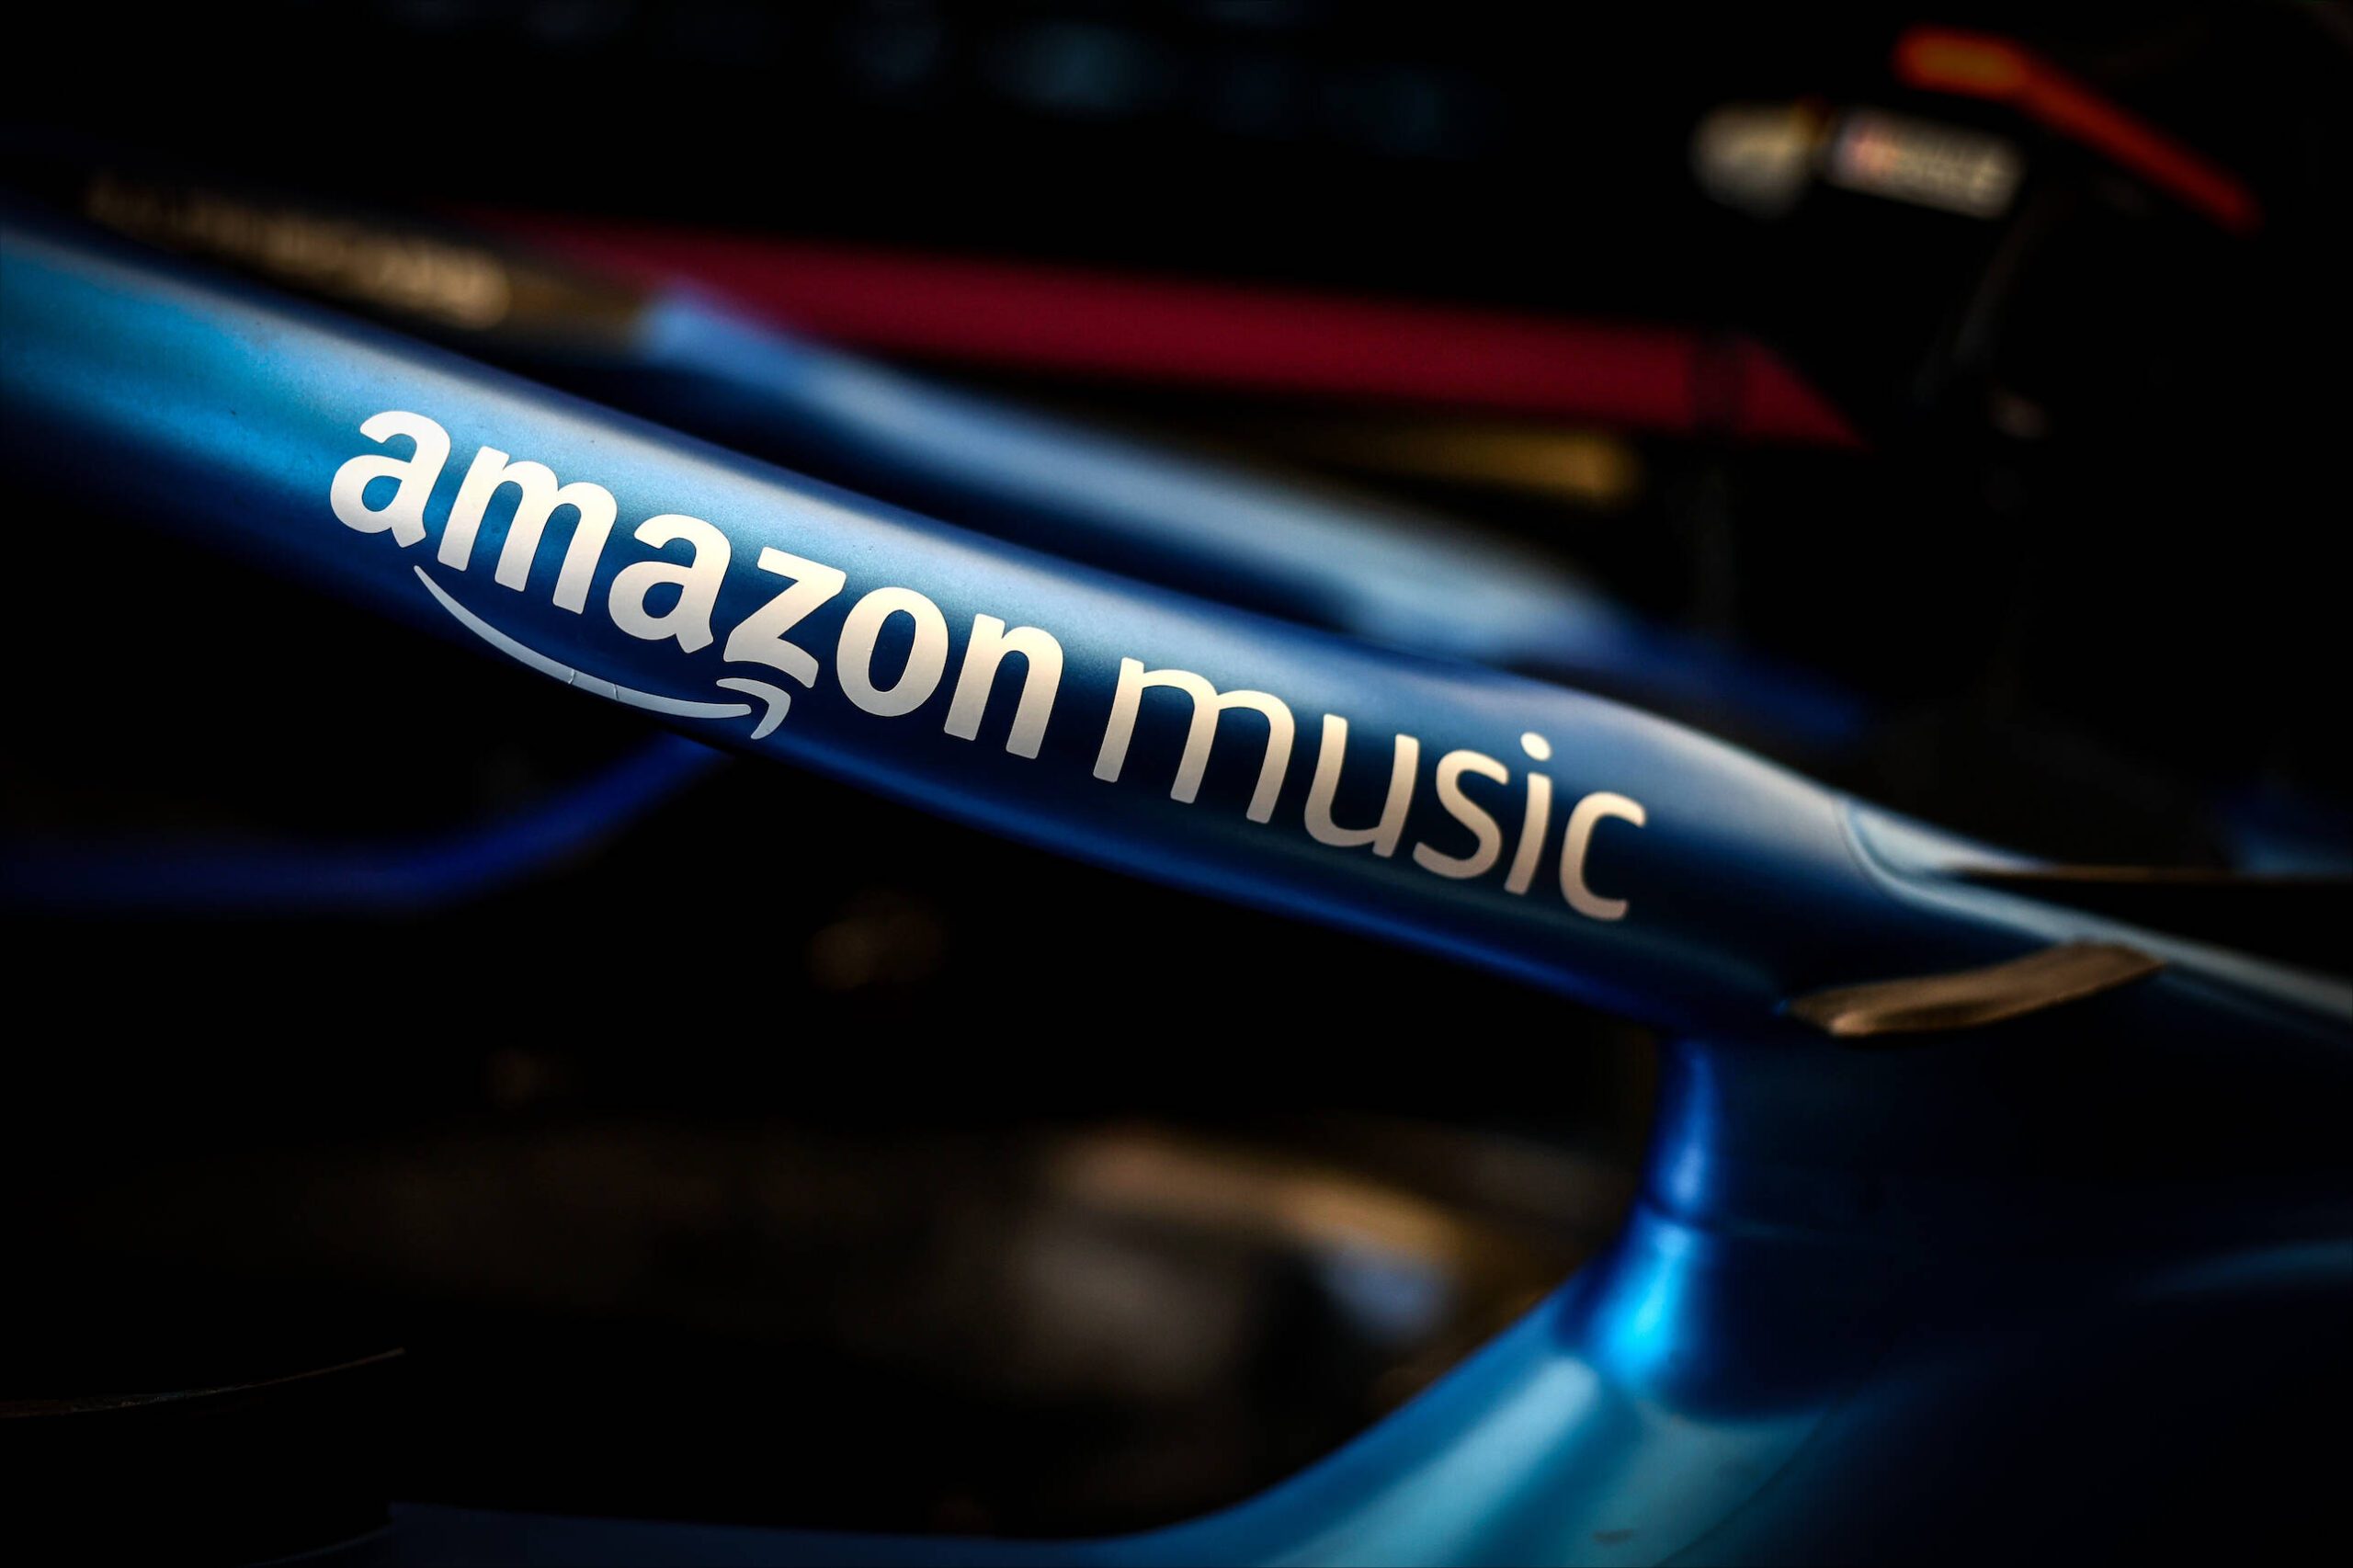 Amazon Music logo on a car belonging to the BWT Alpine F1 team